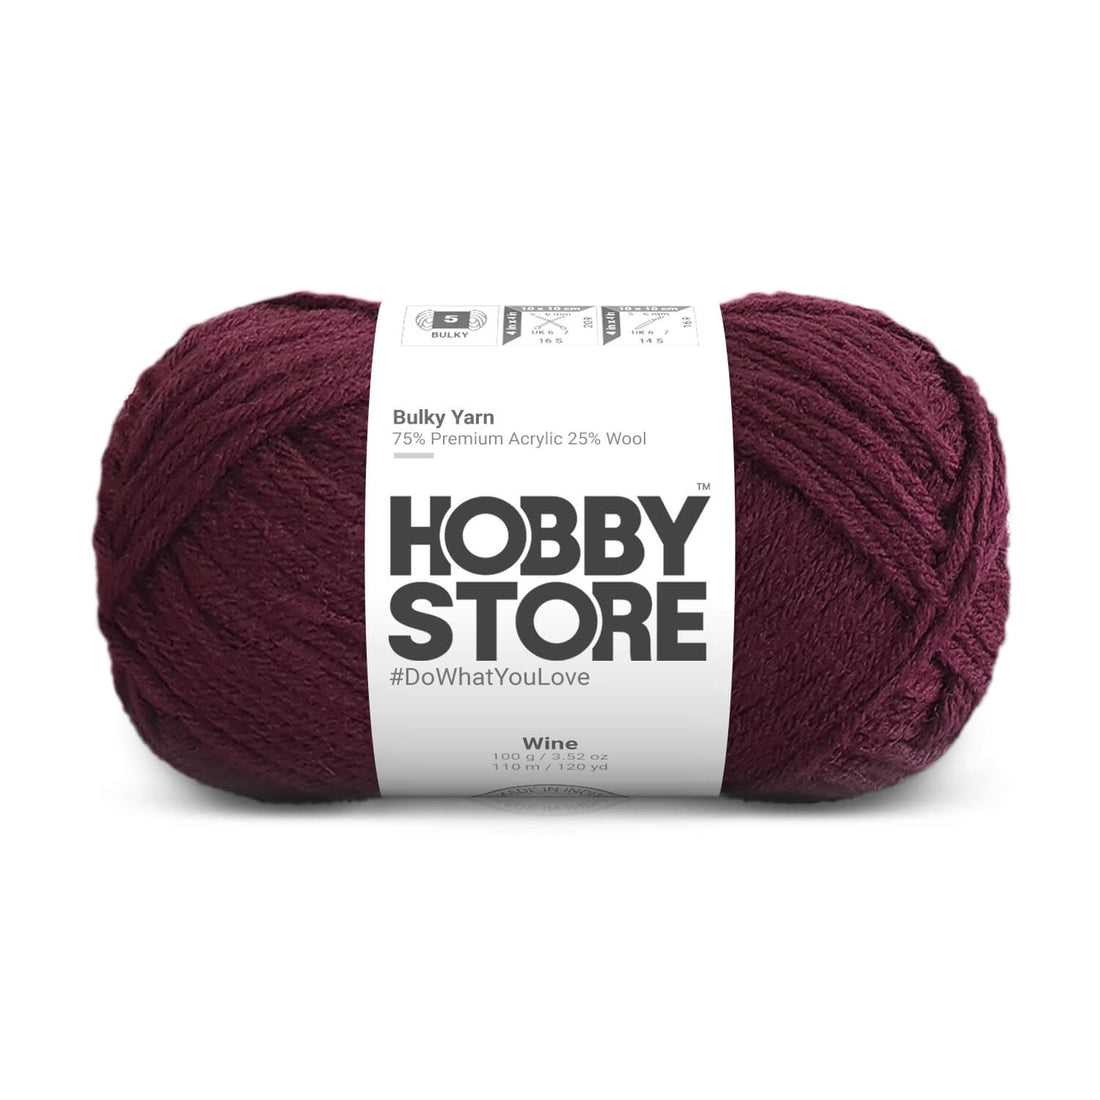 Bulky Yarn by Hobby Store - Wine 6020